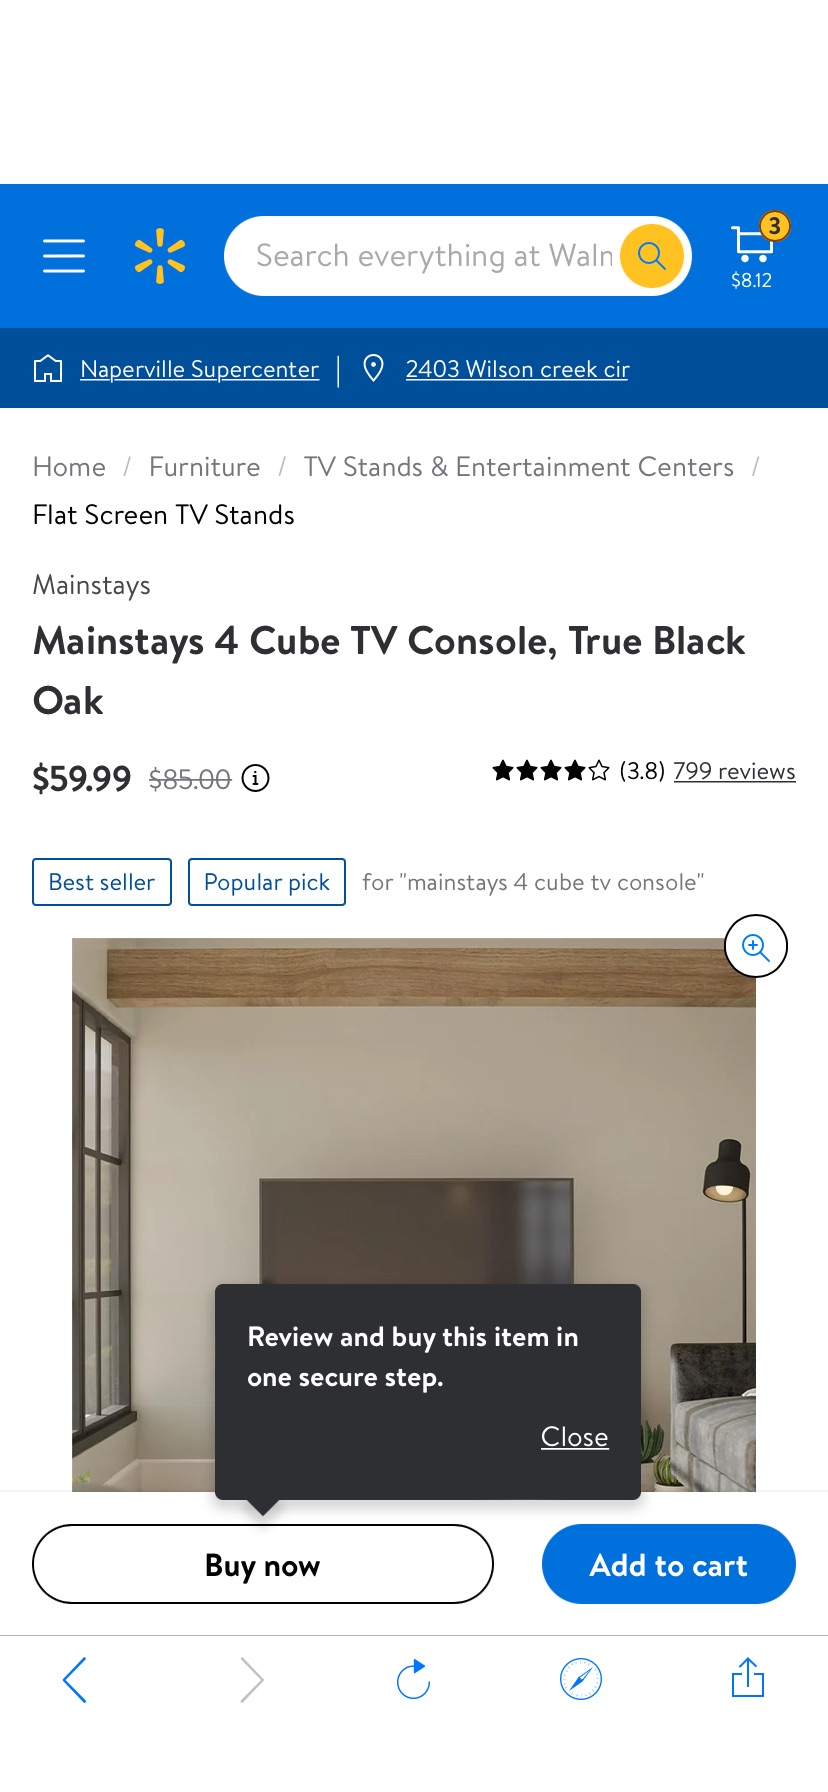 Mainstays 4 Cube 电视控制台，True Black Oak - Walmart.com